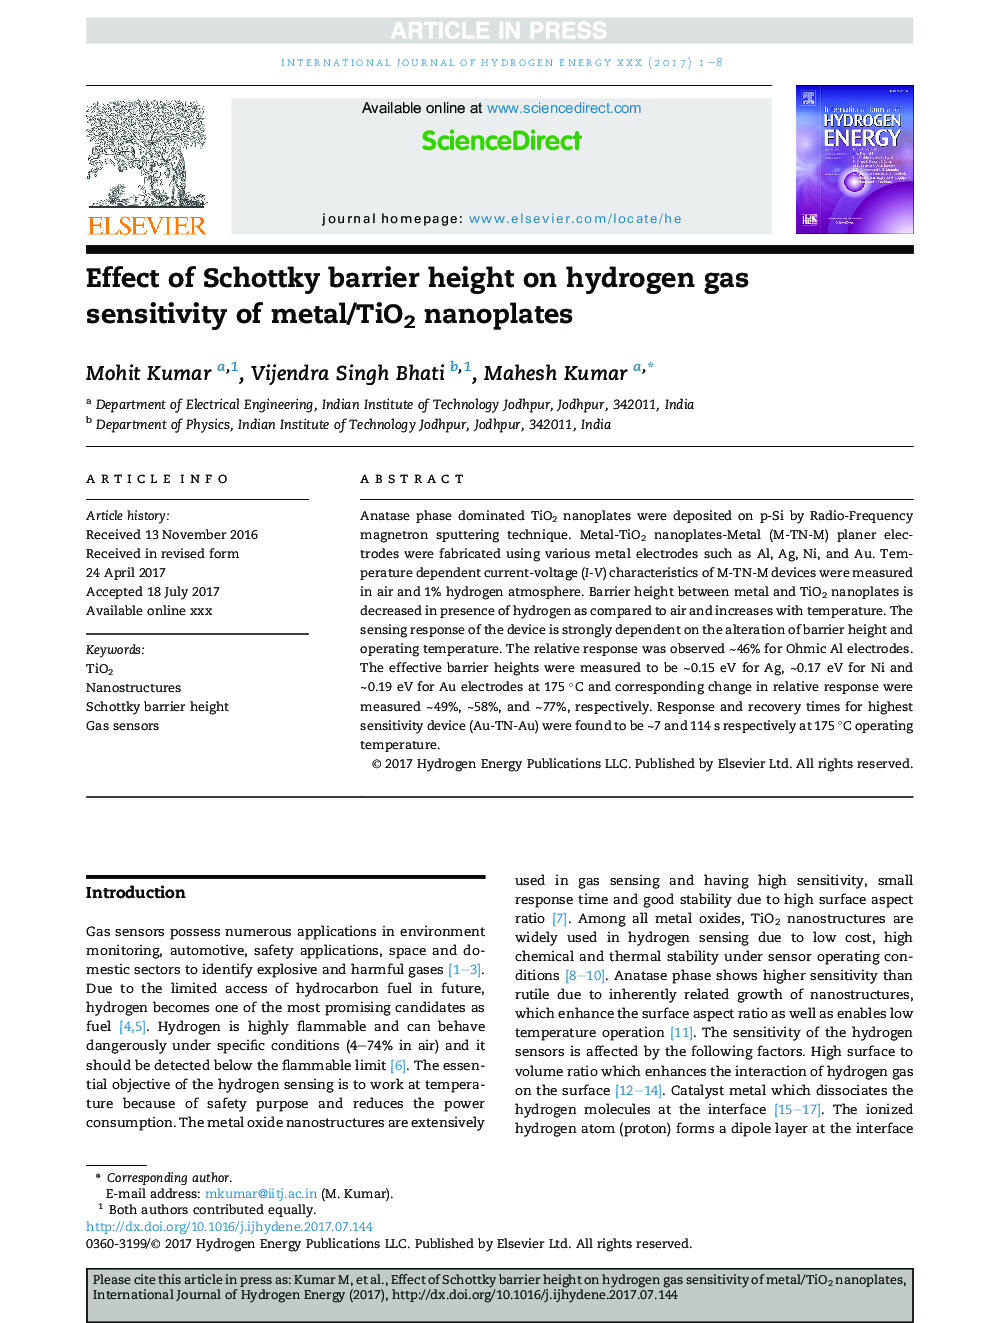 Effect of Schottky barrier height on hydrogen gas sensitivity of metal/TiO2 nanoplates